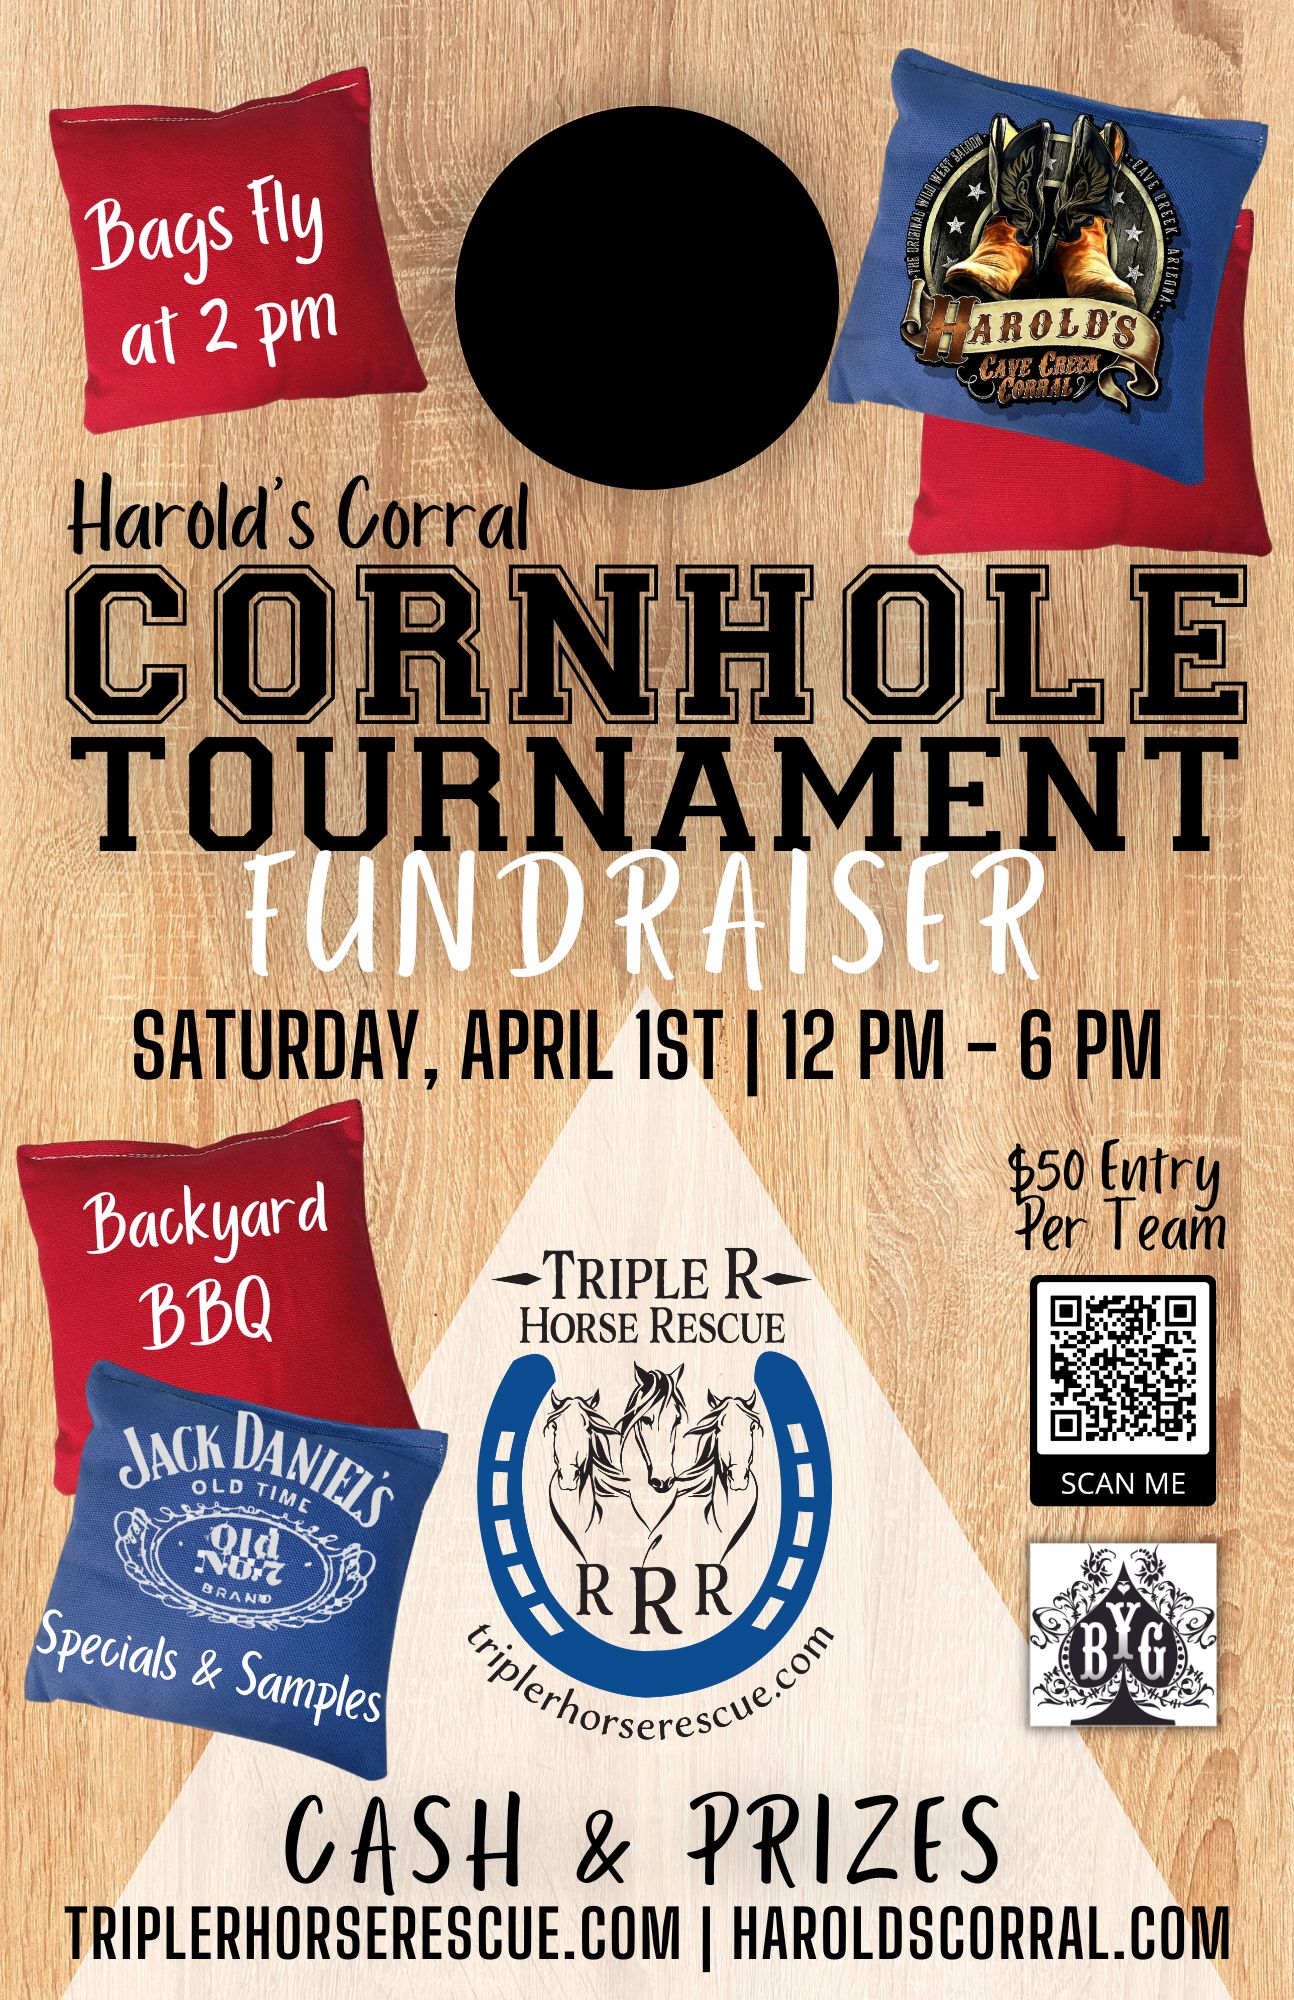 RRR Cornhole Tournament at Harold's Corral